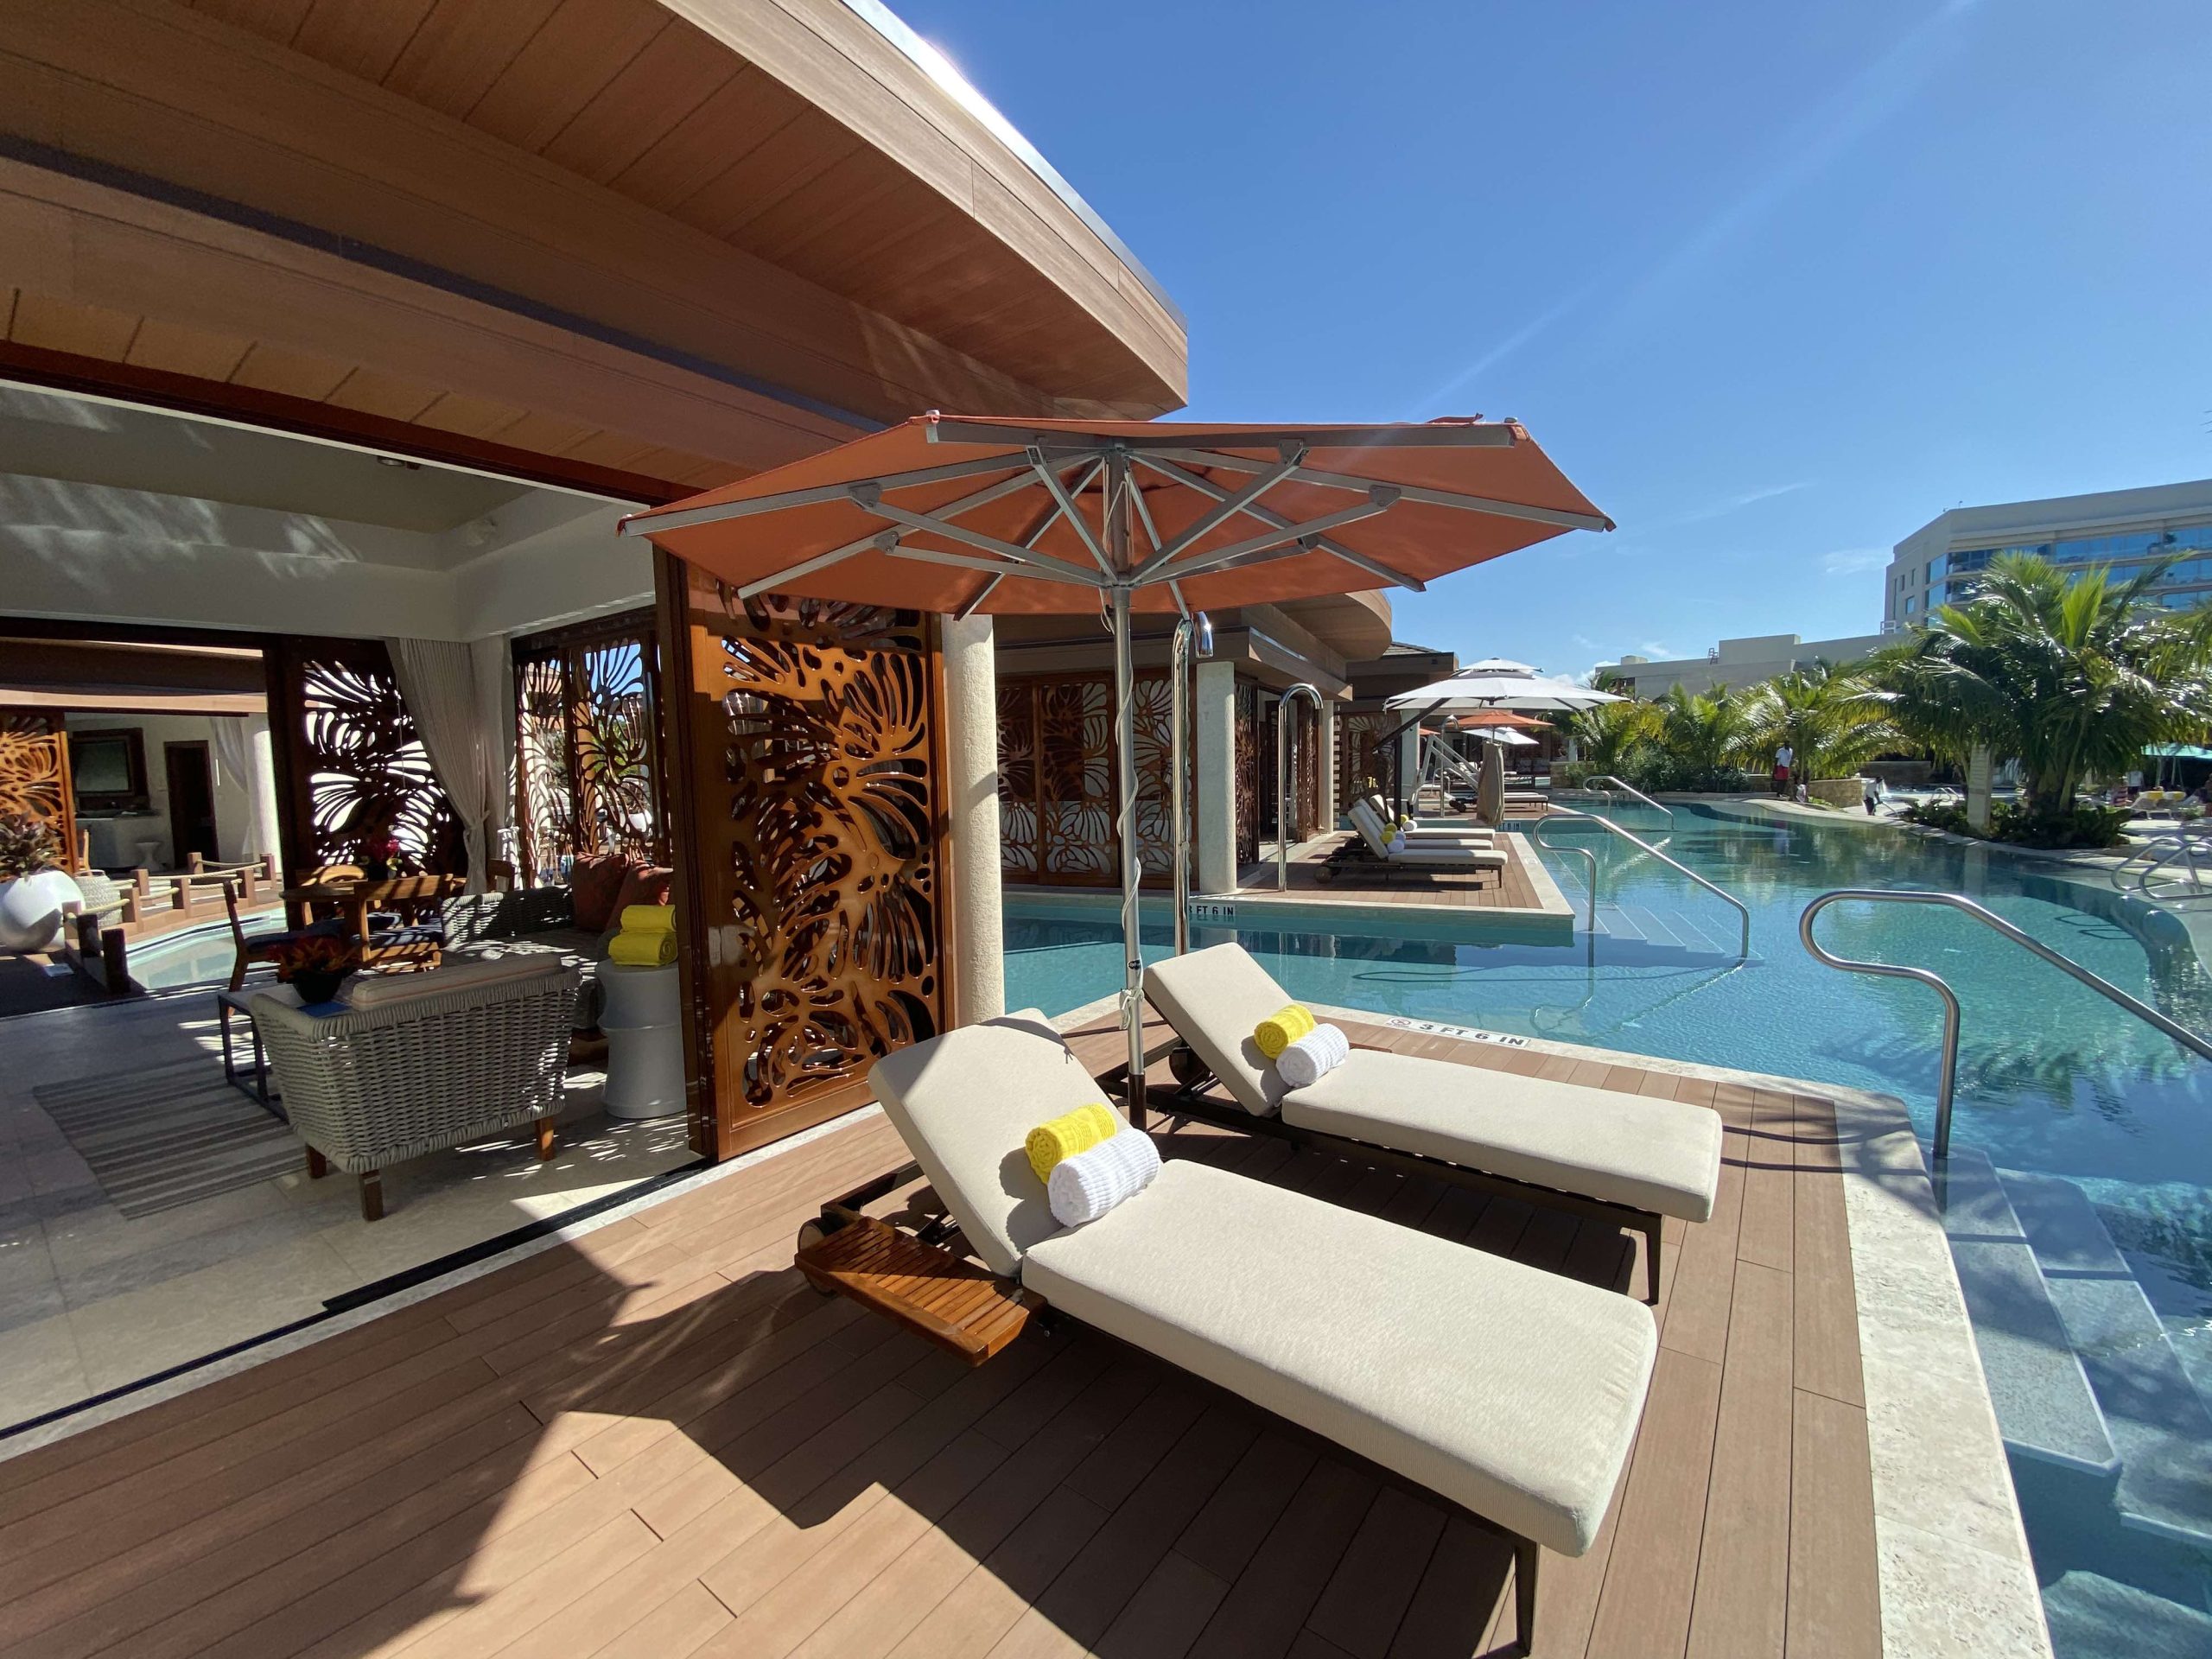 Hotel Pool Umbrellas / Hotel Poolside Furniture / Luxury Hotel Linens